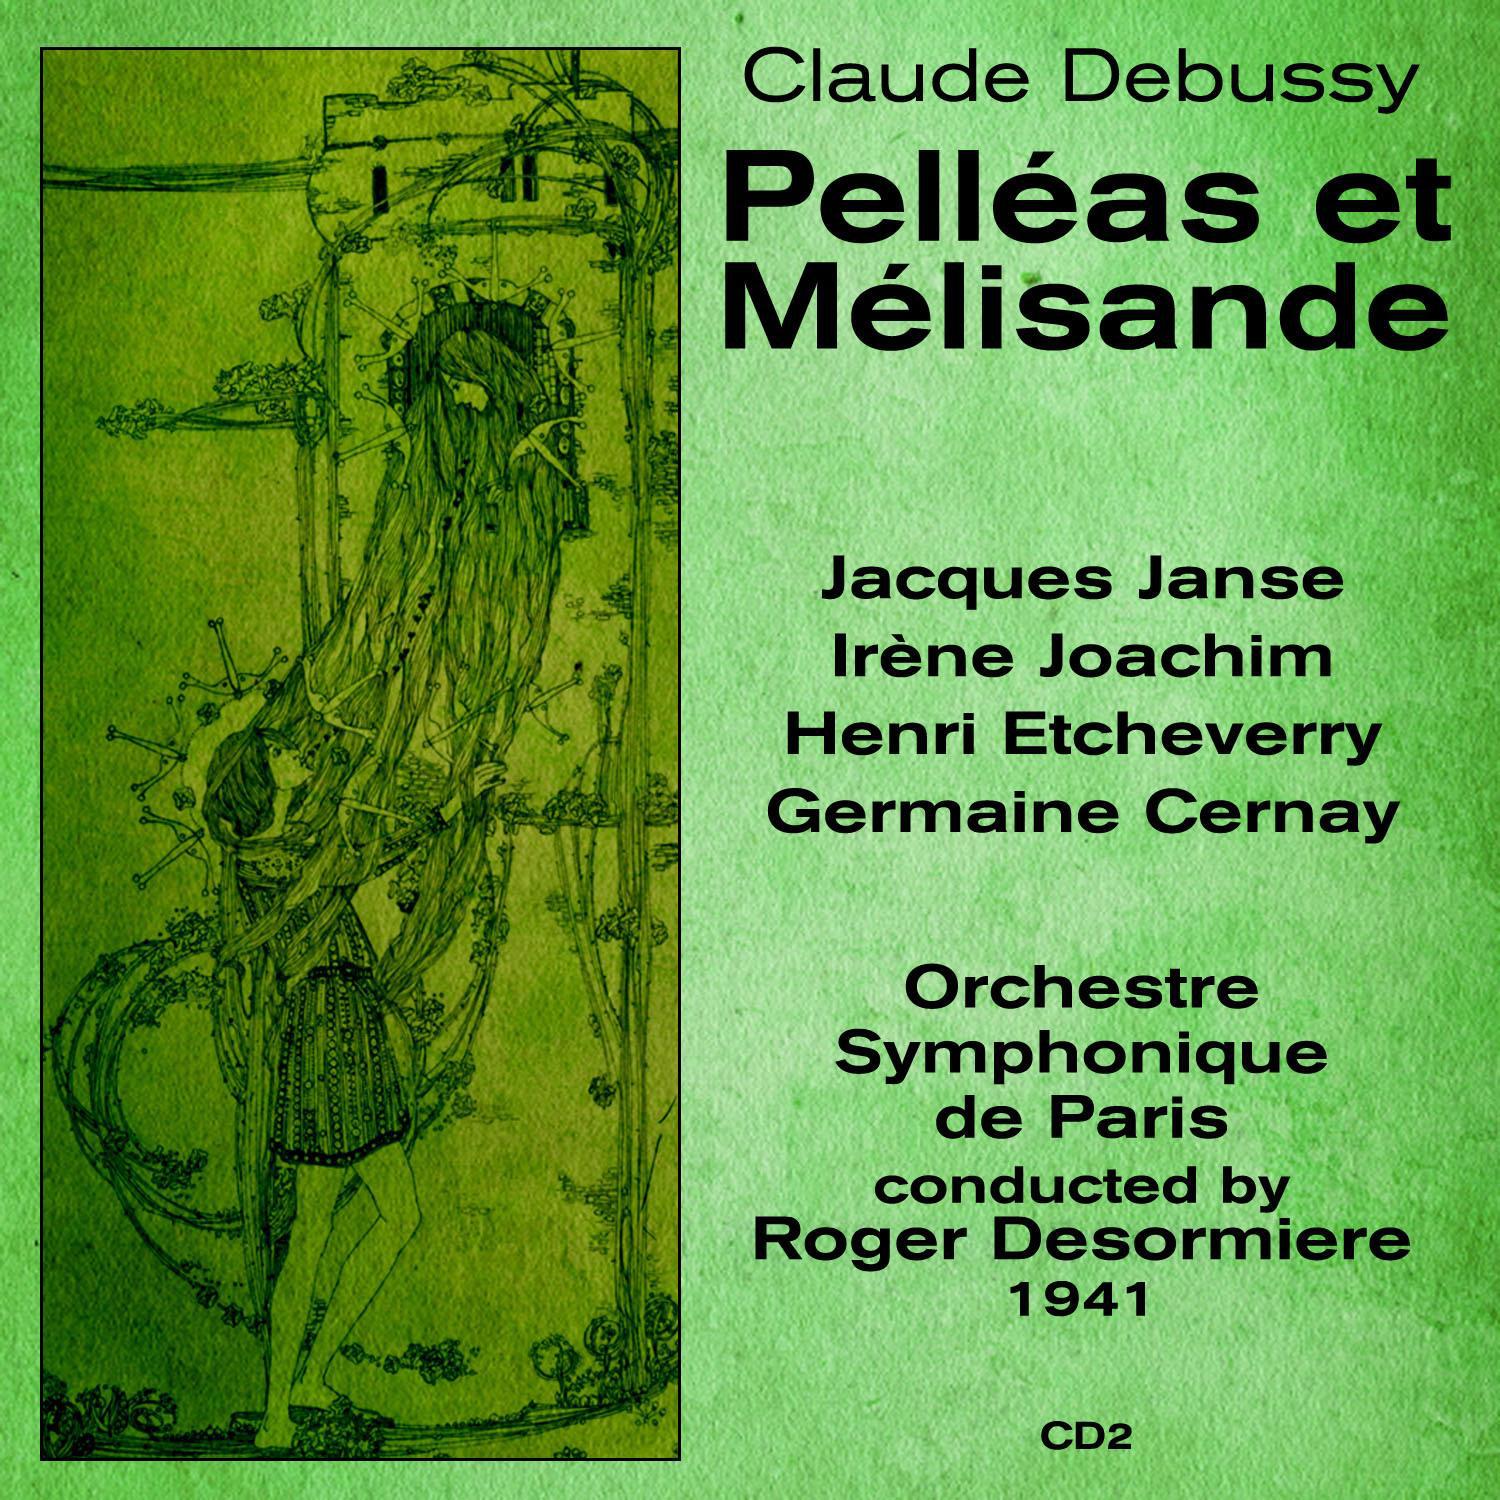 Claude Debussy: Pelle as et Me lisande 1941, Volume 2